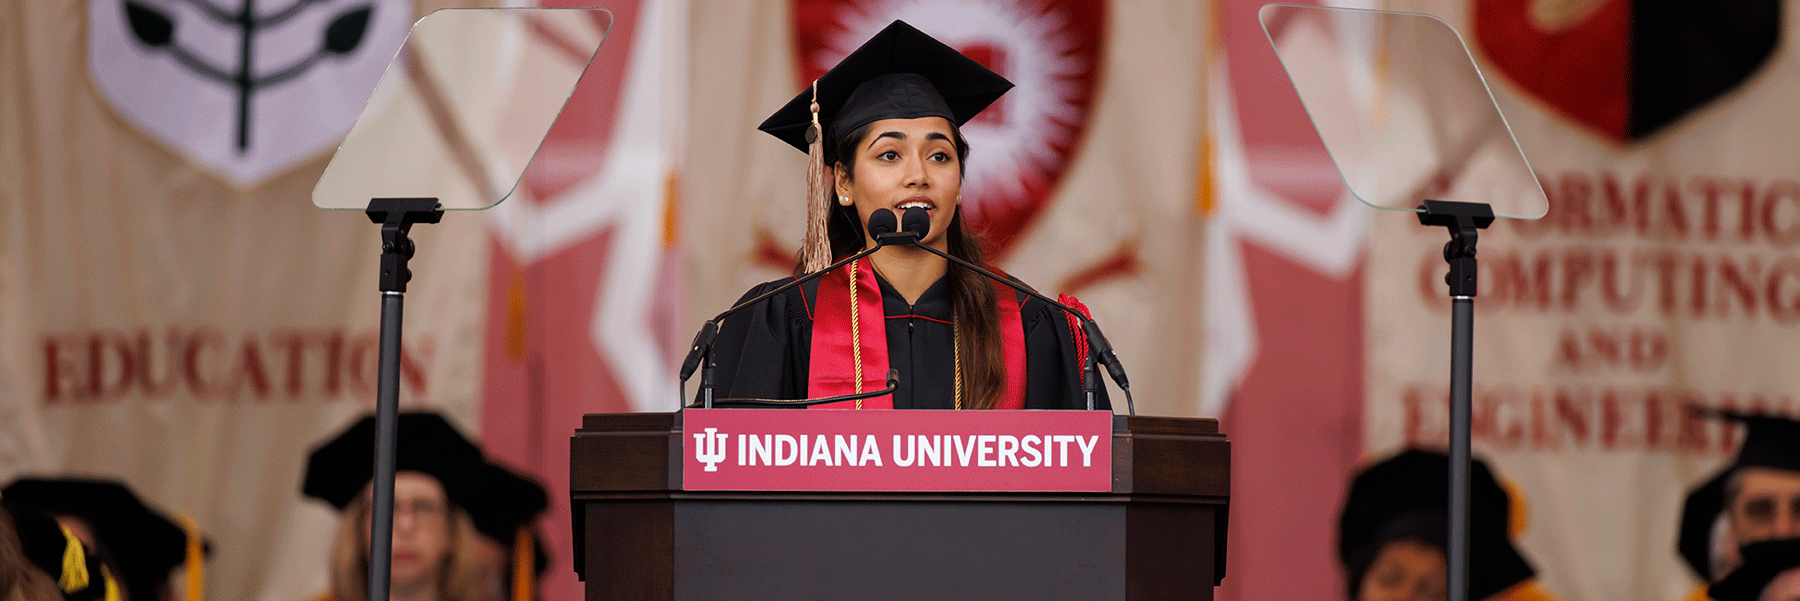 Gayatri Thiru, the undergraduate student commencement speaker, at the podium during the ceremony.